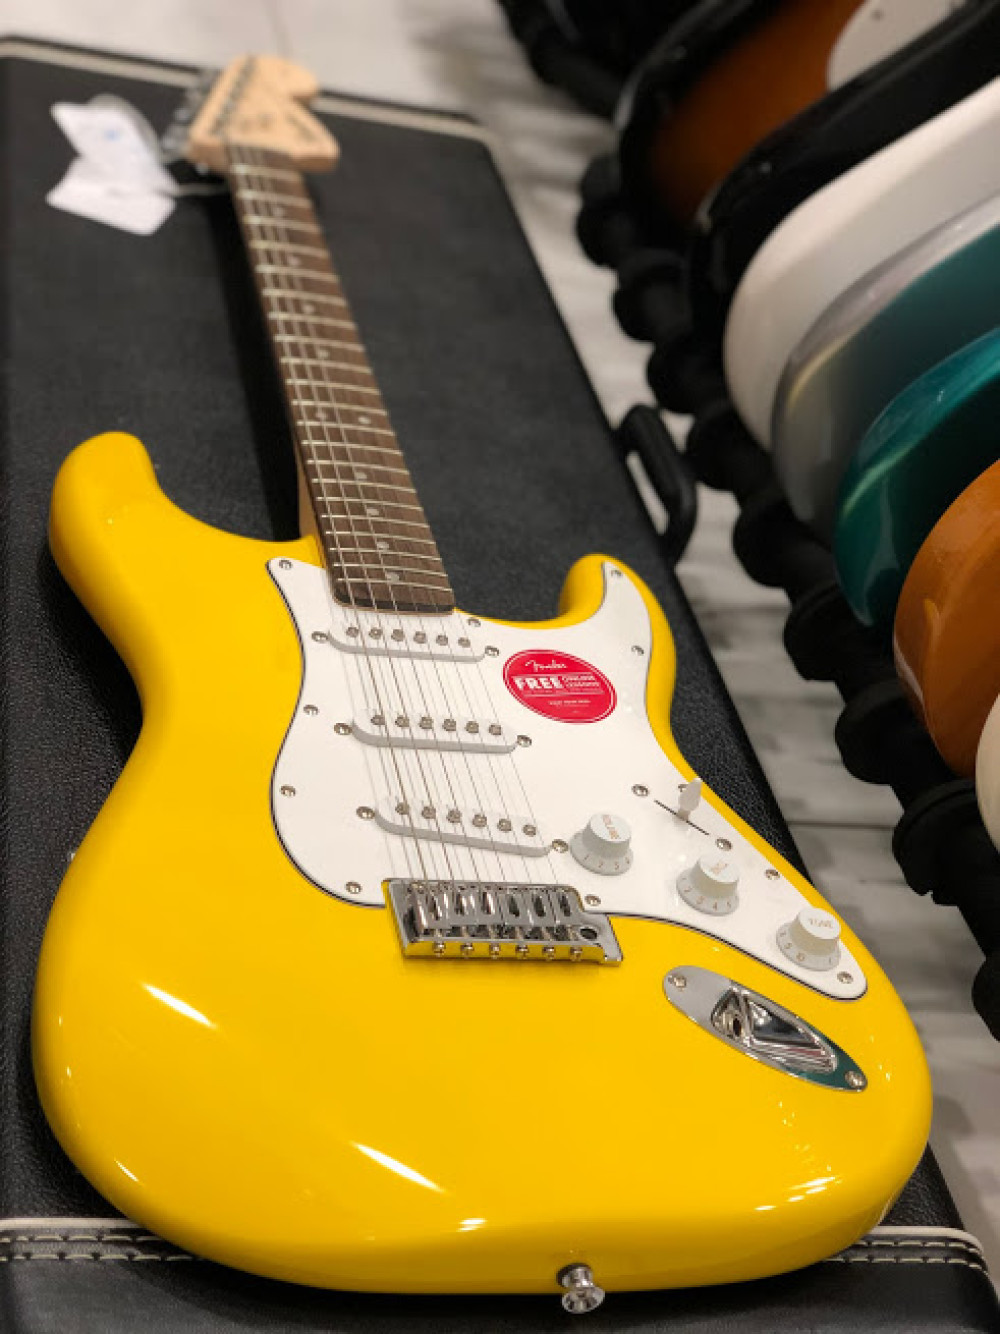 Affinity stratocaster. Fender Stratocaster желтая. Squier Stratocaster желтый. Squier Limited Edition Affinity Stratocaster. Фендер стратокастер желтый арт.